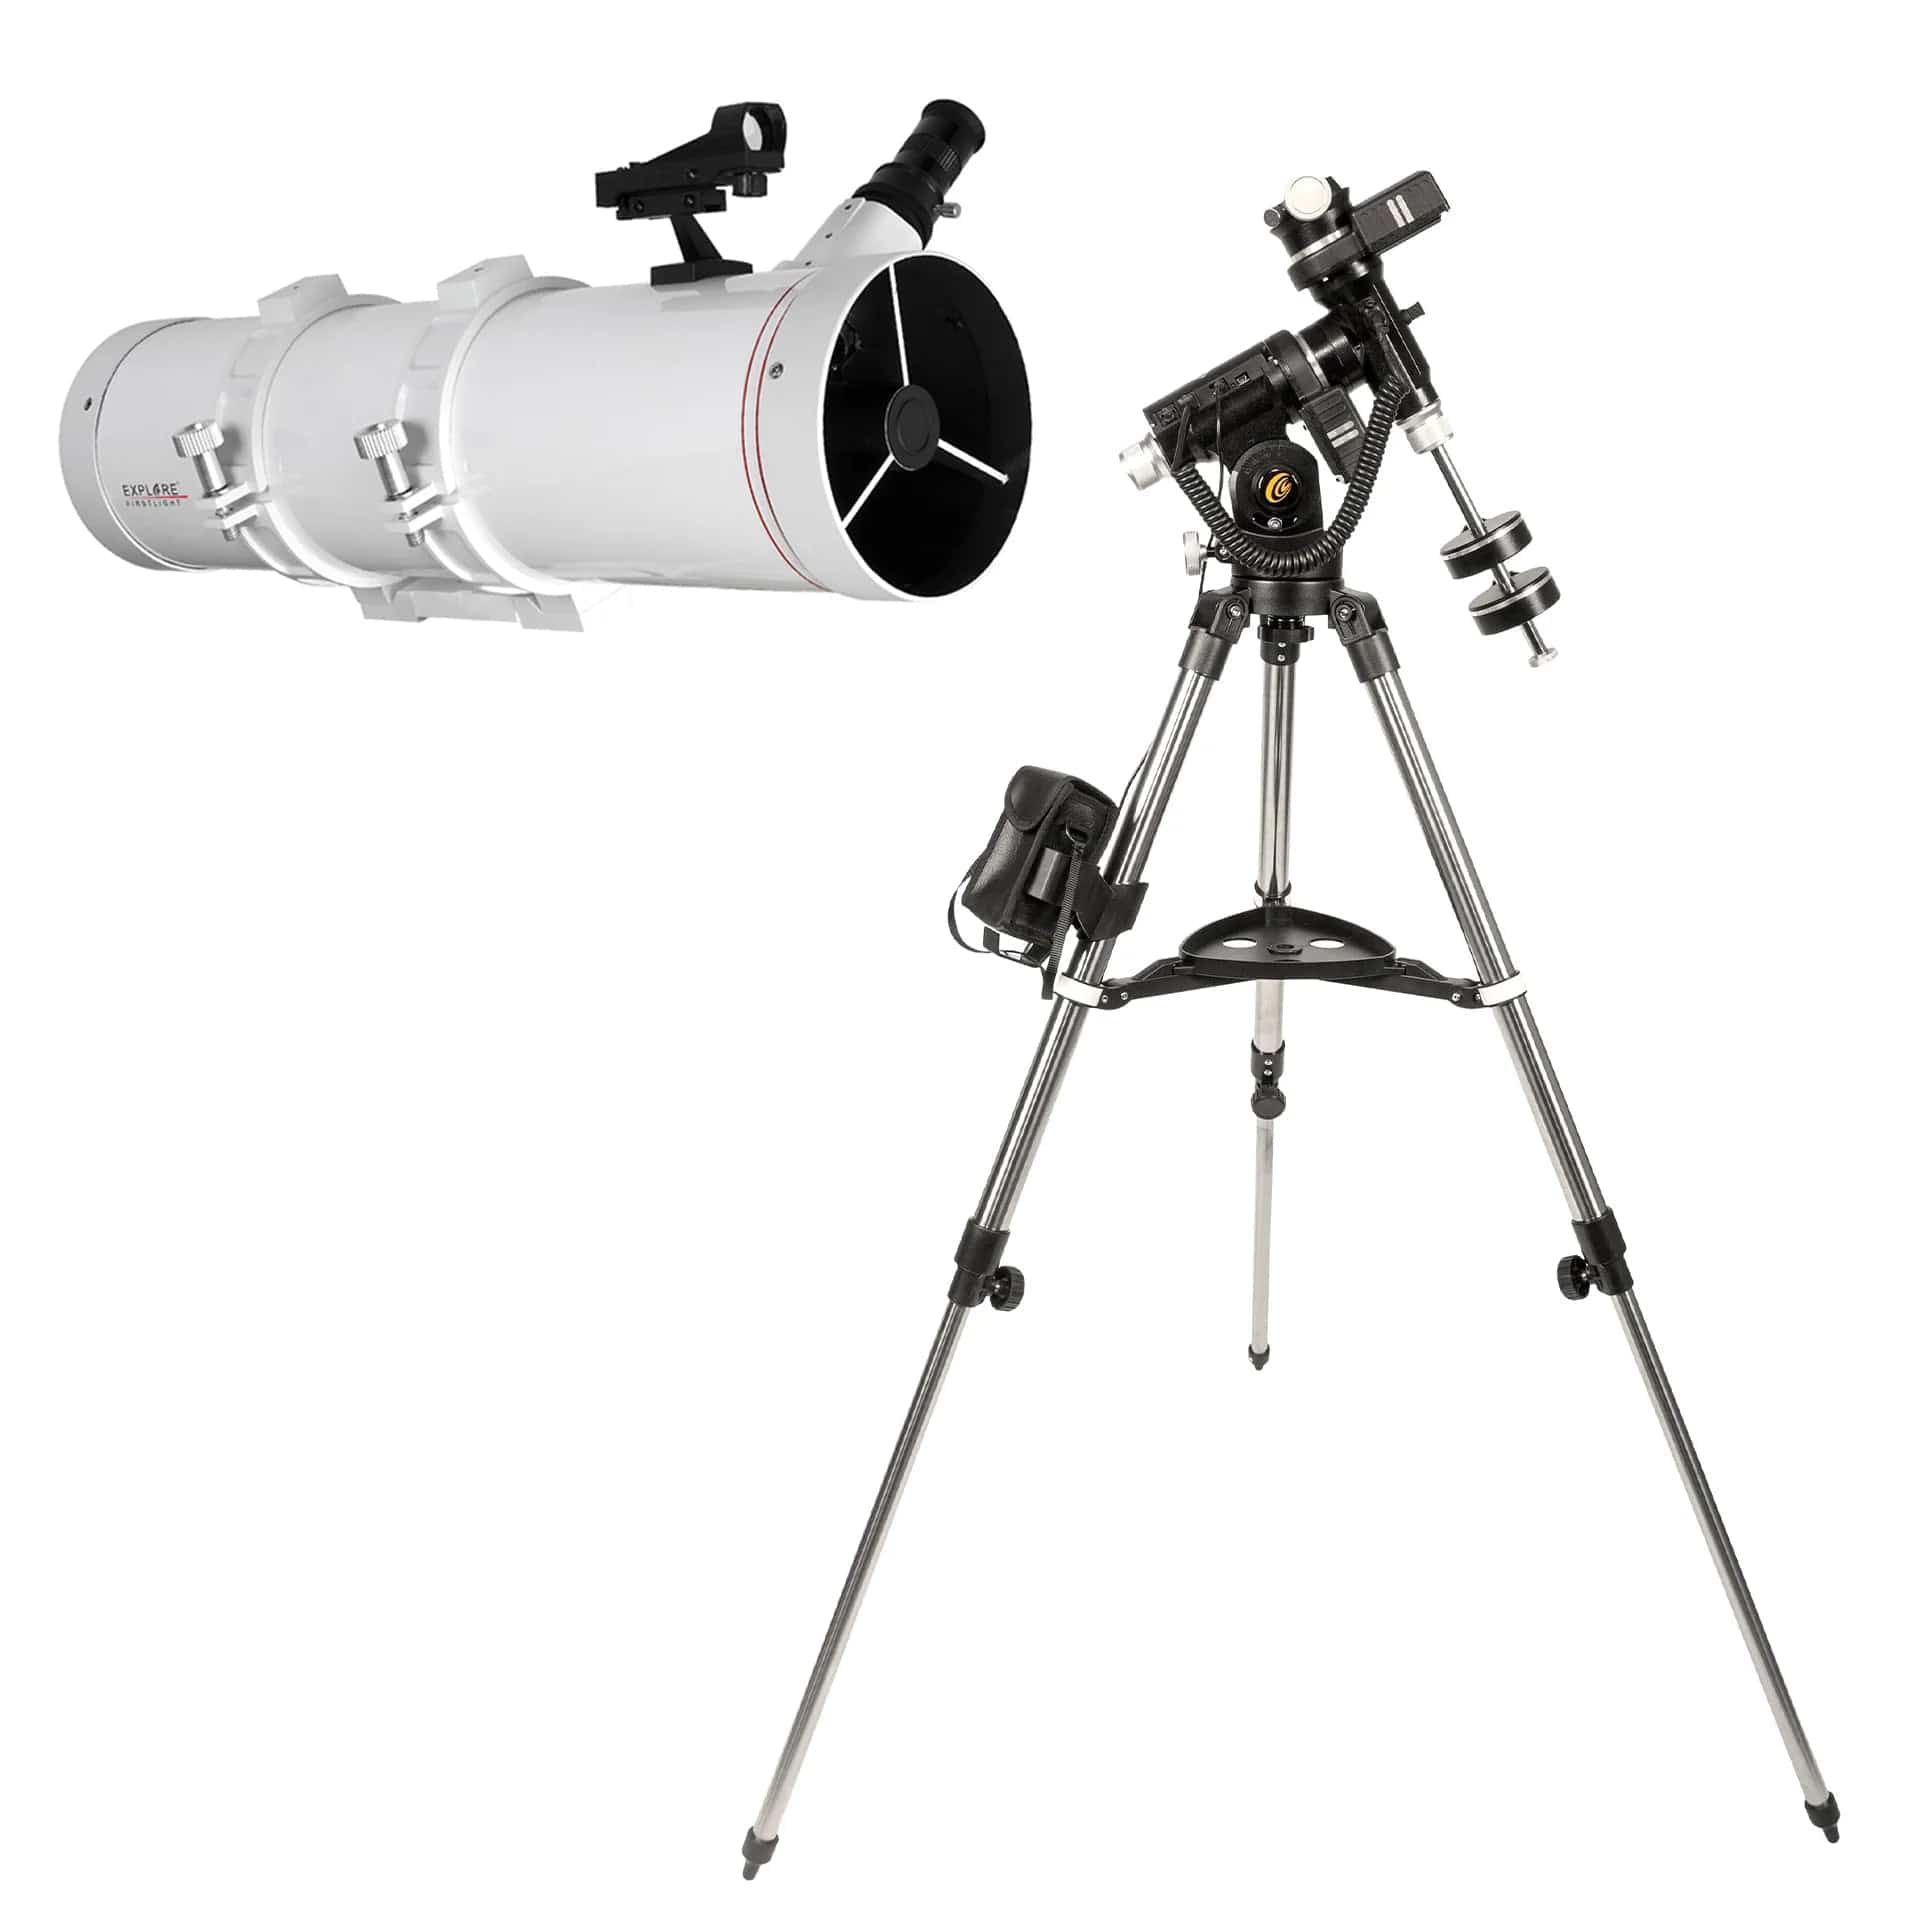 Explore Scientific Telescope Explore FirstLight 130mm Newtonian Telescope with iEXOS-100 PMC-Eight Equatorial Tracker System - FL-N130600-IEXOS